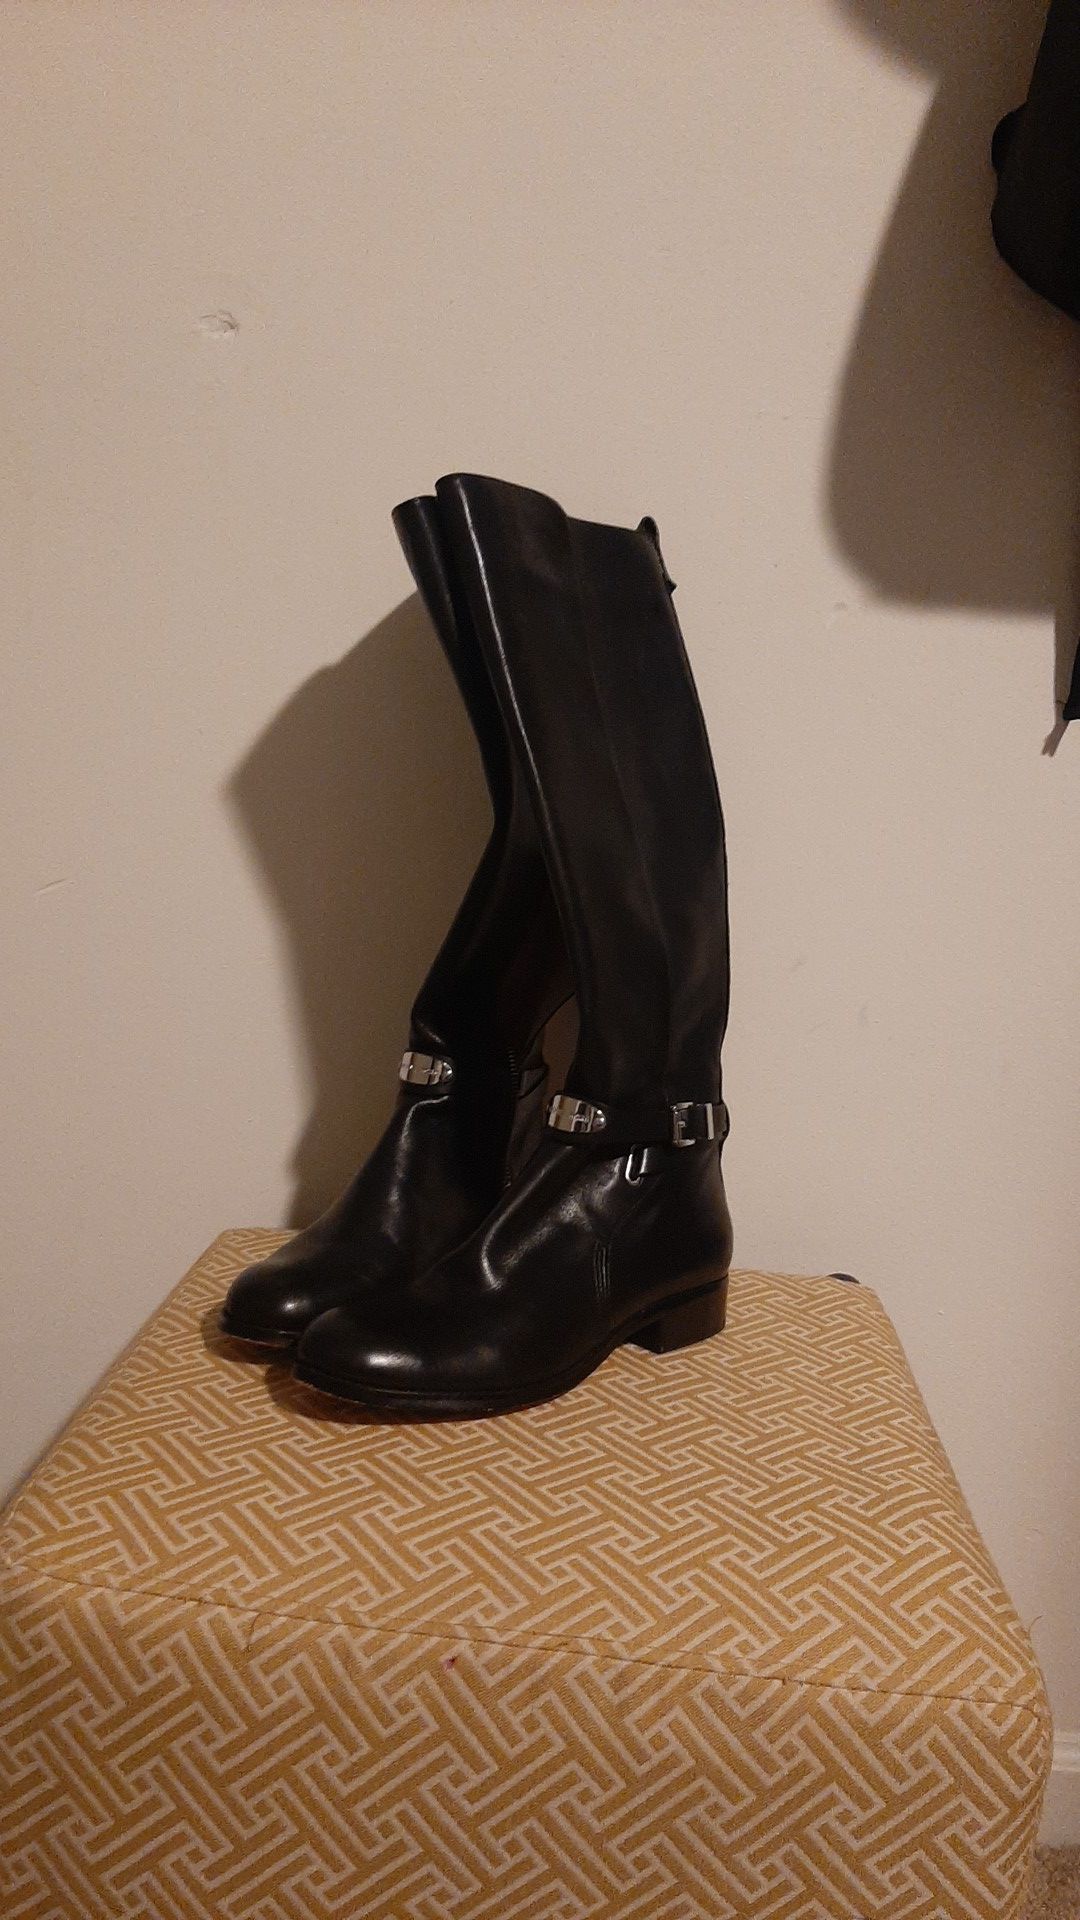 Michael Kors size 8 tall boots